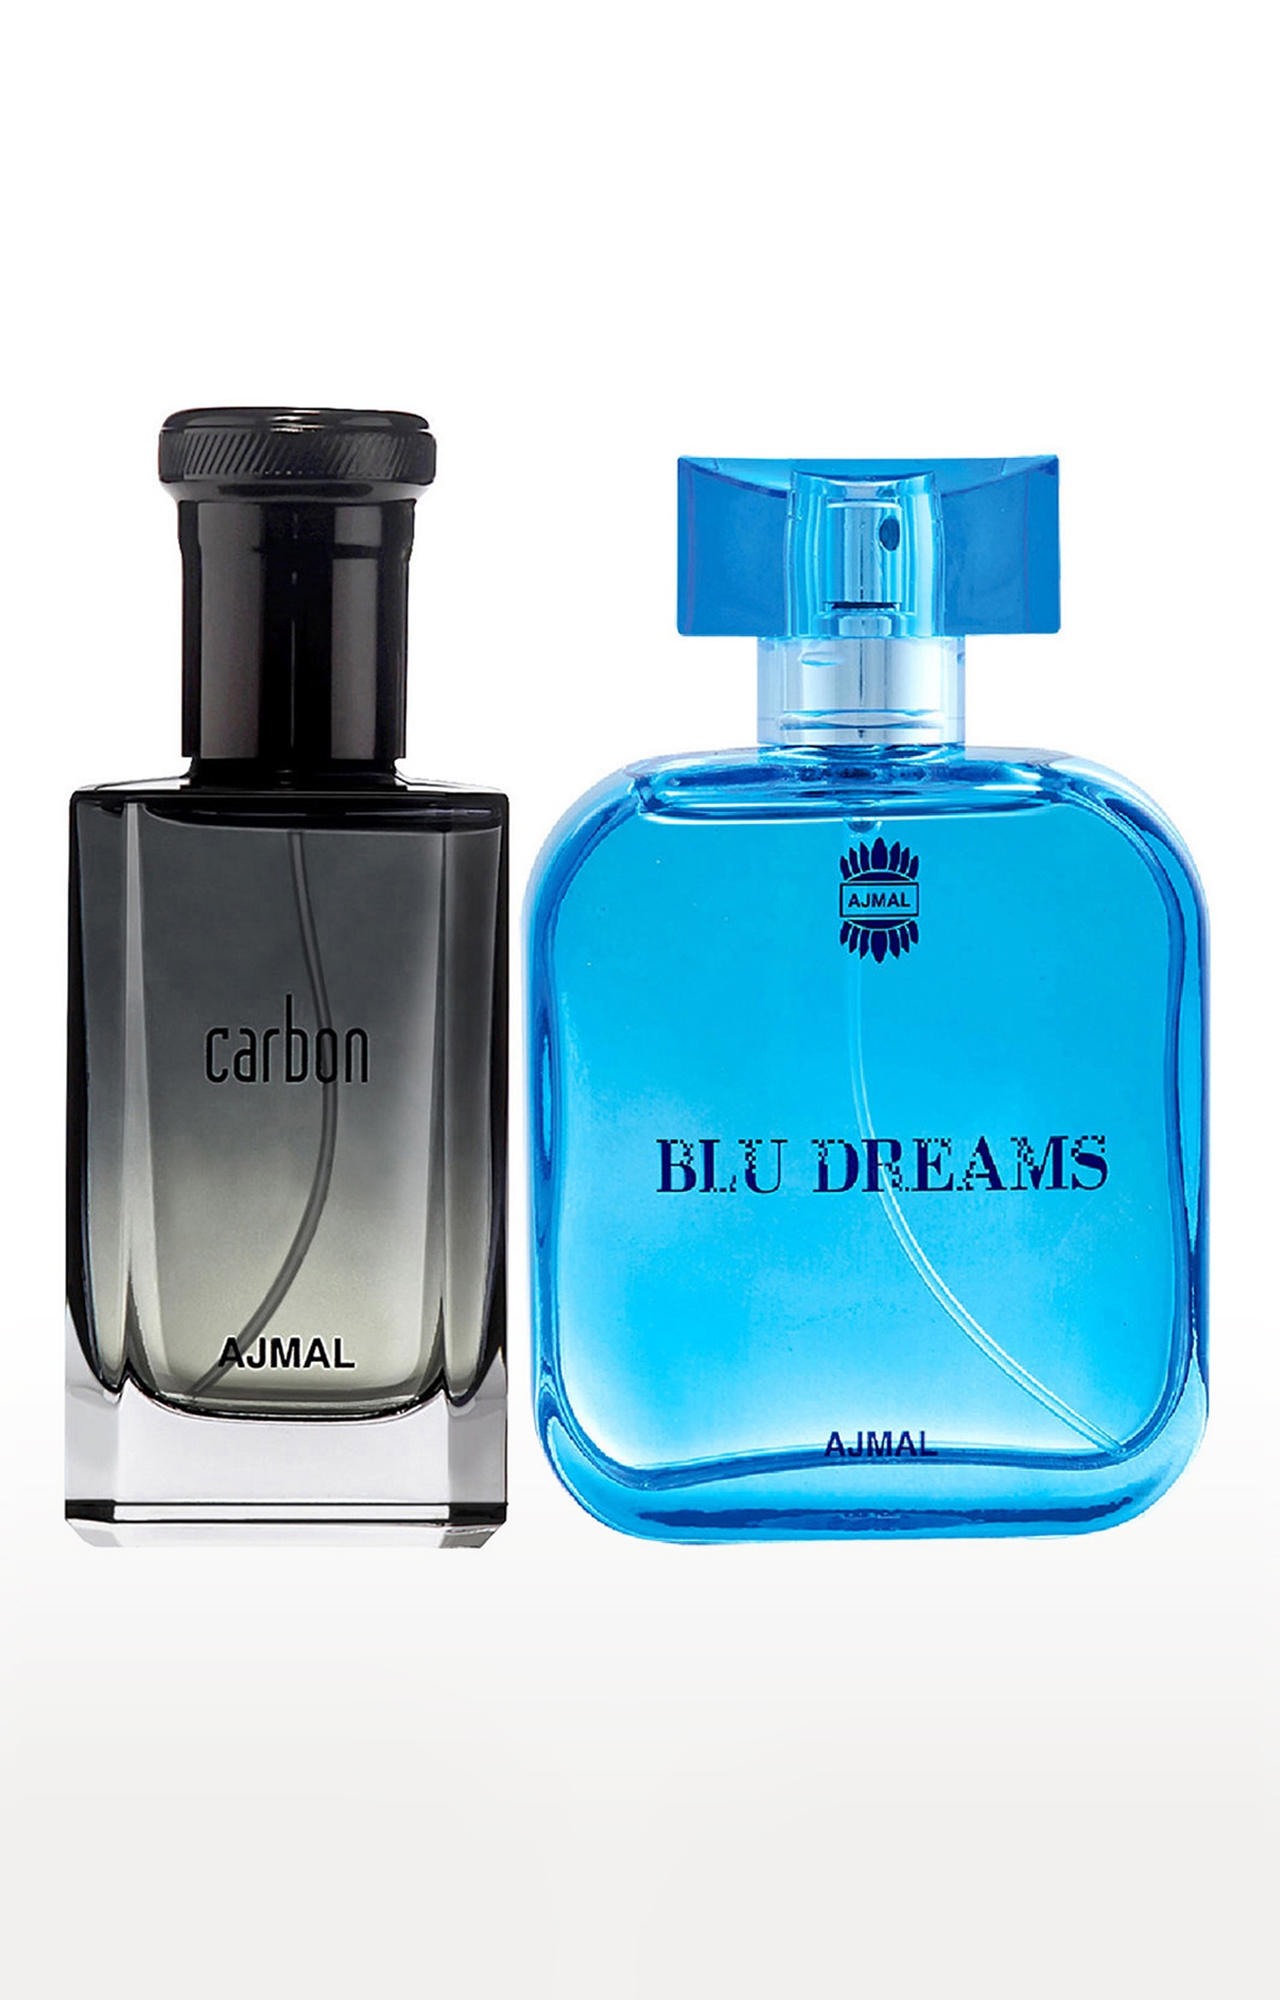 Ajmal Carbon EDP Perfume 100ml for Men and Blu Dreams EDP Citurs Fruity Perfume 100ml for Men FREE